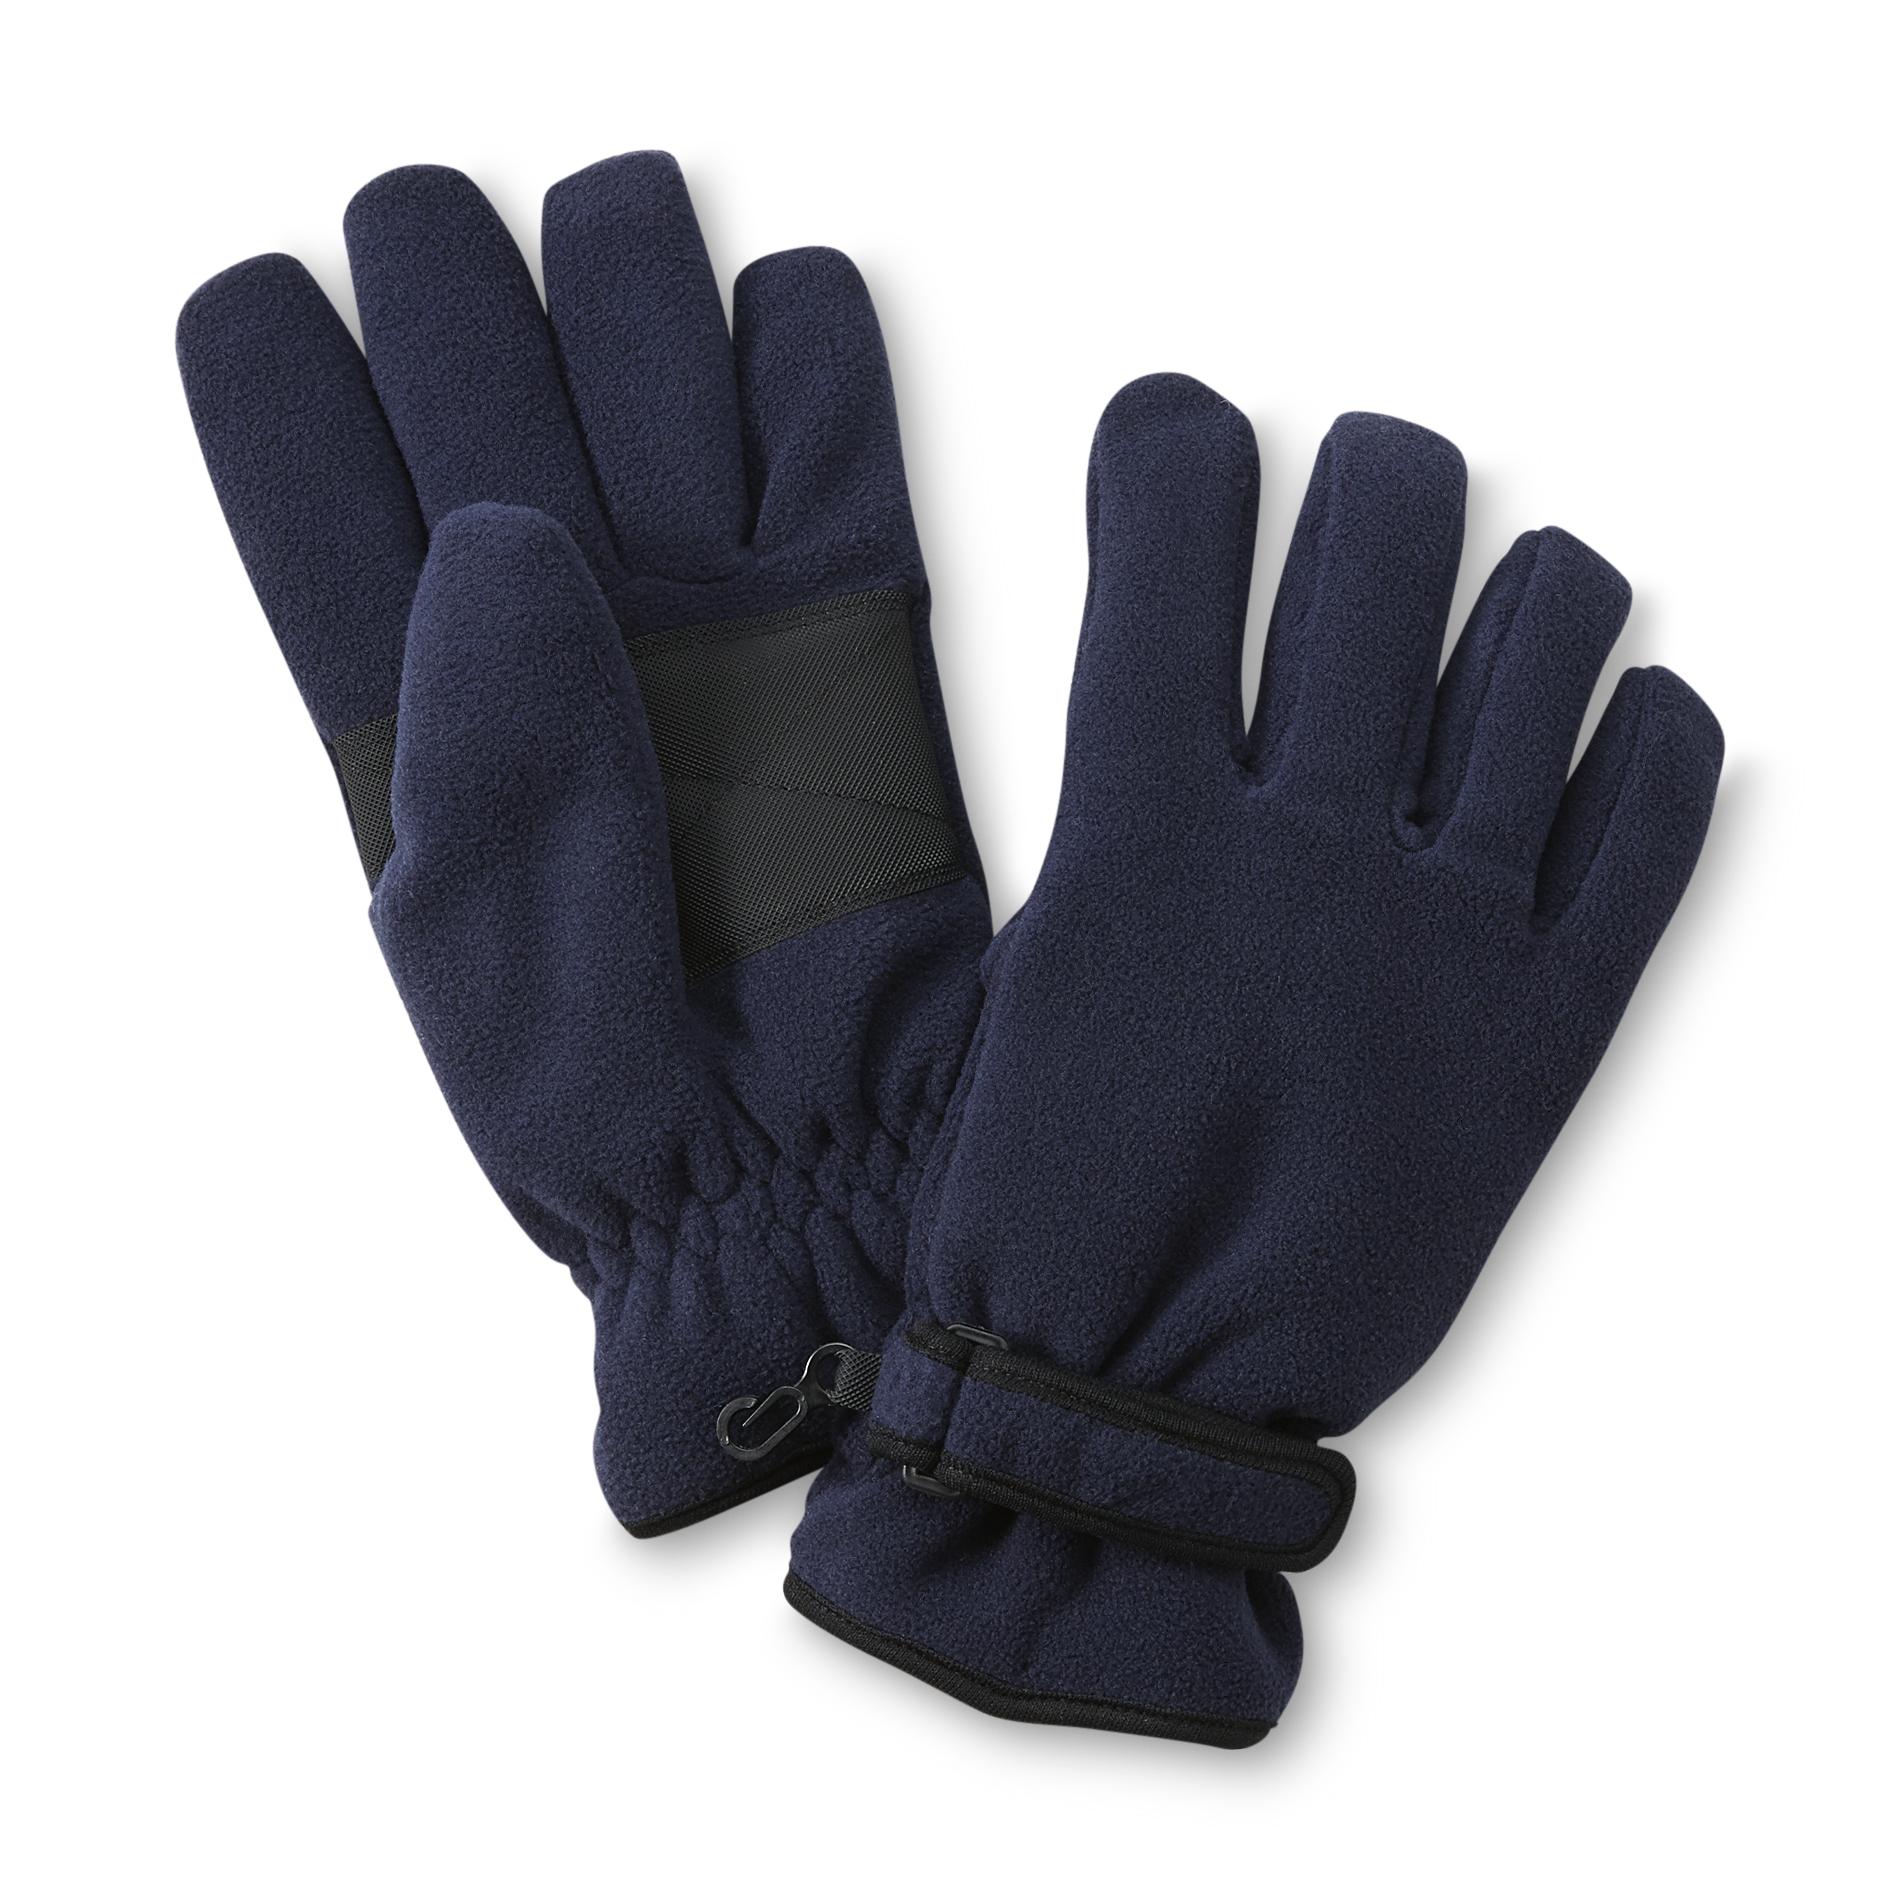 NordicTrack Men's Microfleece Thinsulate Gloves